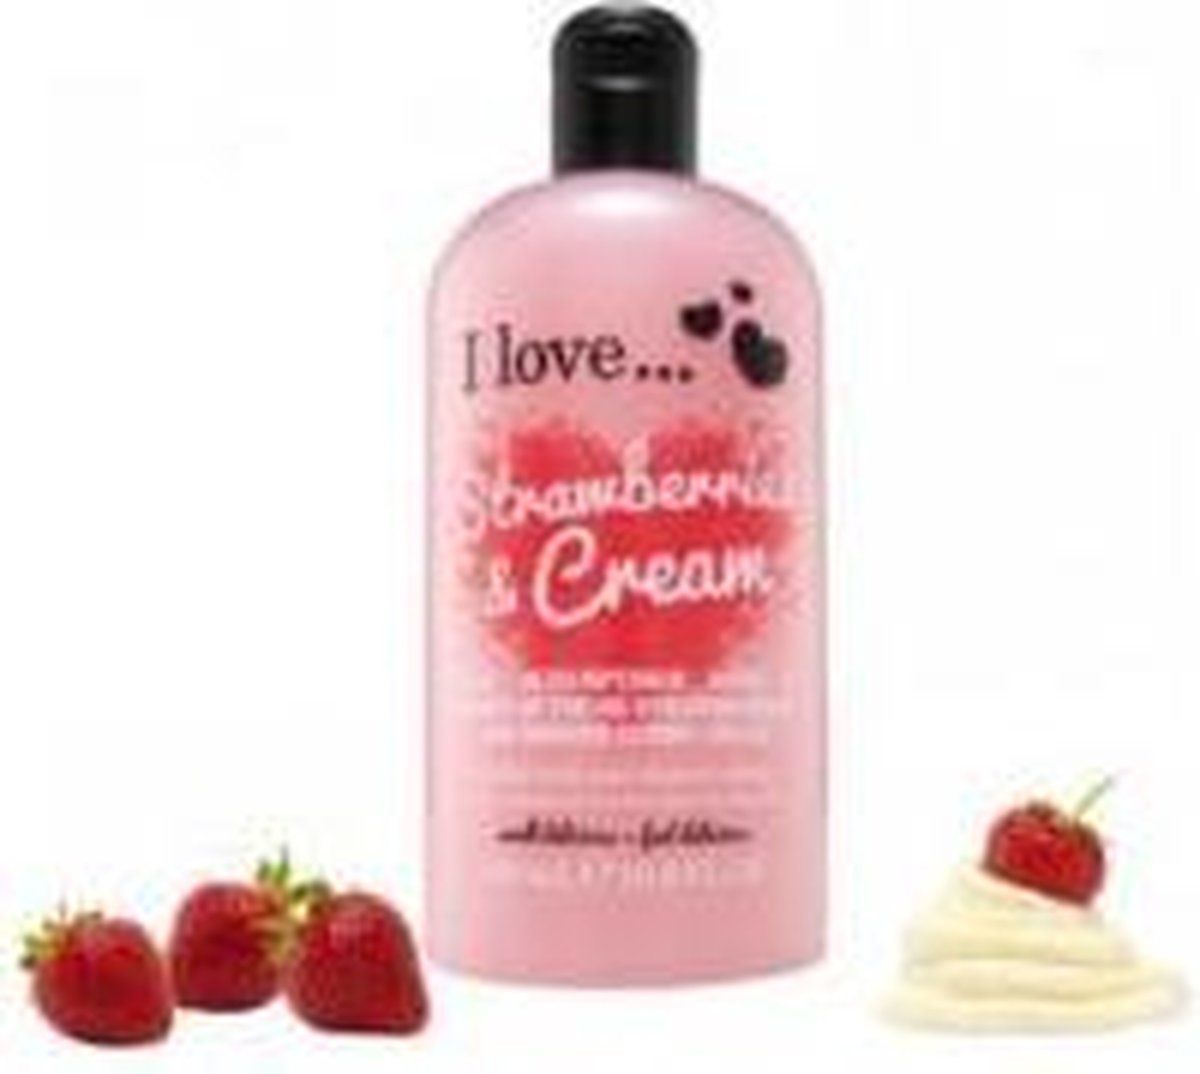 I Love...Strawberries and Cream - Bath and Shower Gel - 500 ml.